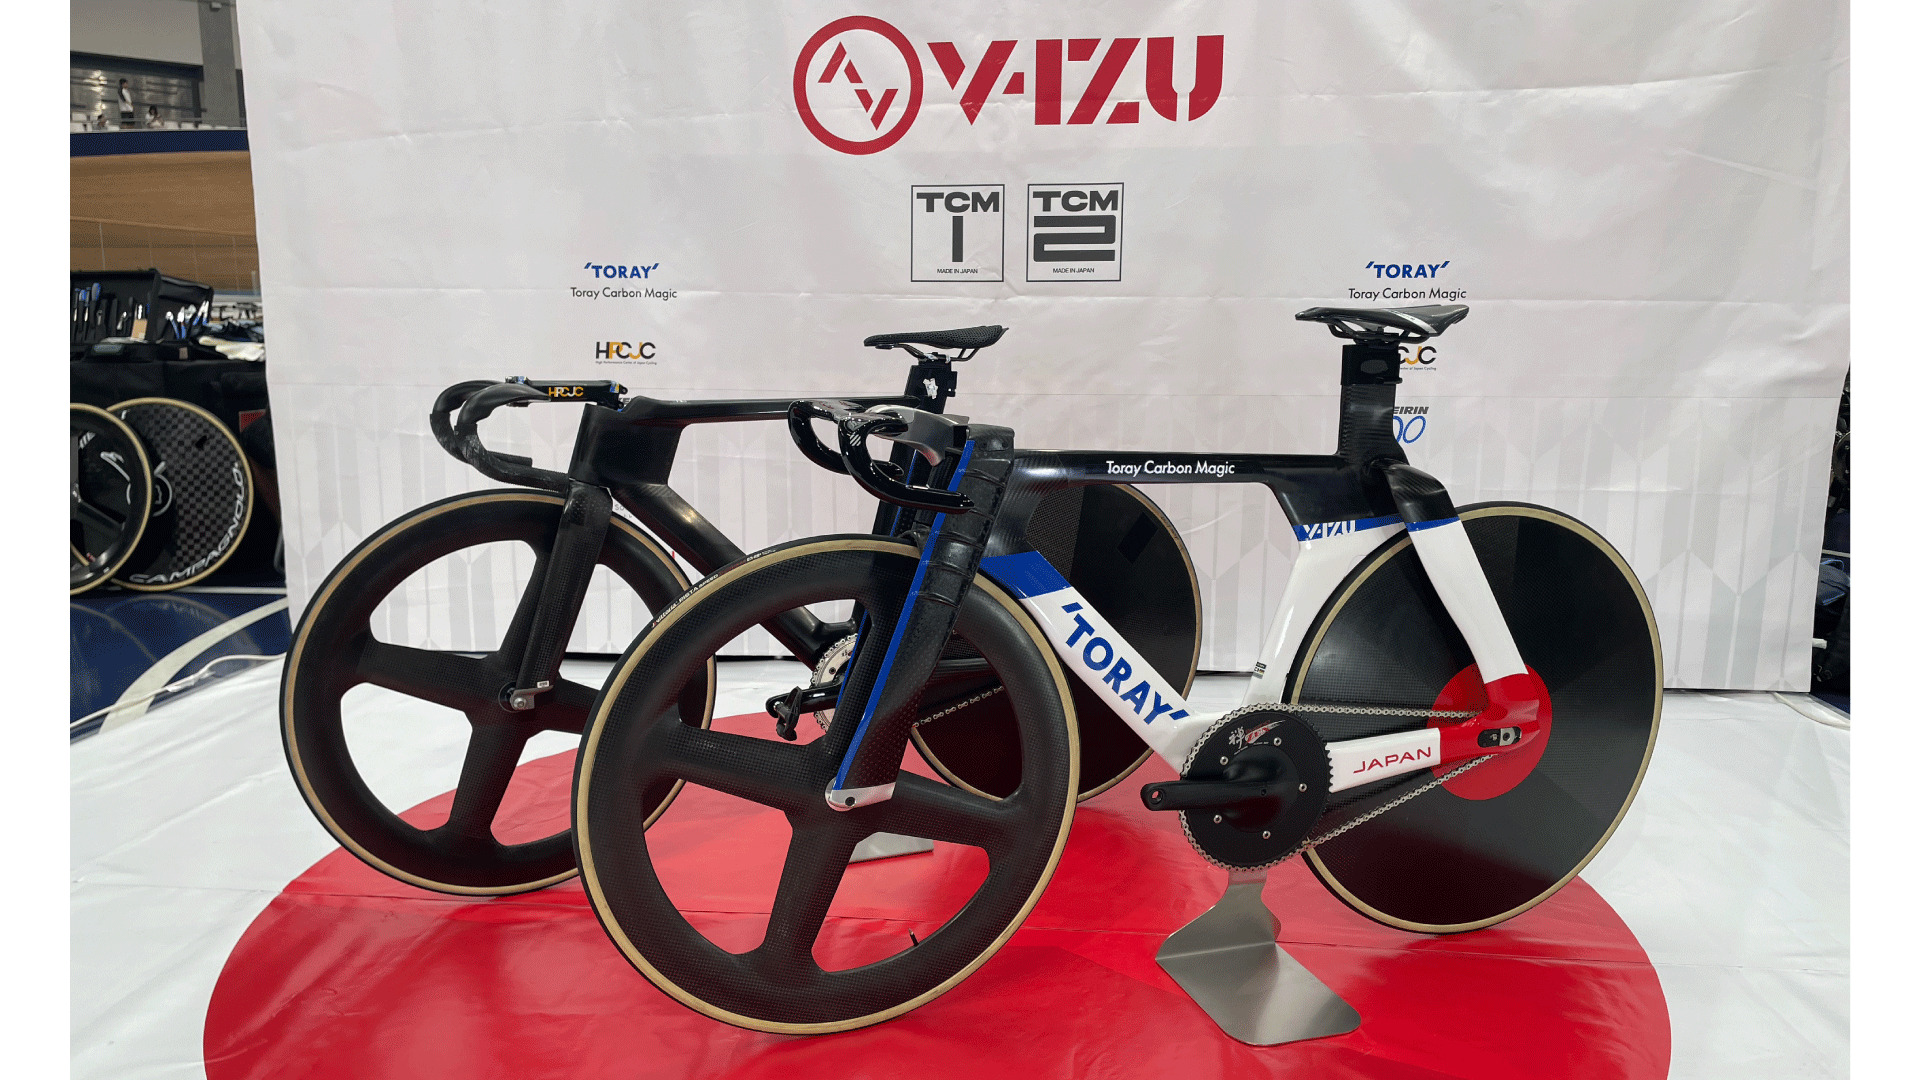 JCFトラック競技東レ・カーボンマジック×HPCJCの新型バイク、パリ五輪で自転車トラック競技日本代表を金メダルへ導く秘密兵器「V-IZU TCM-2」